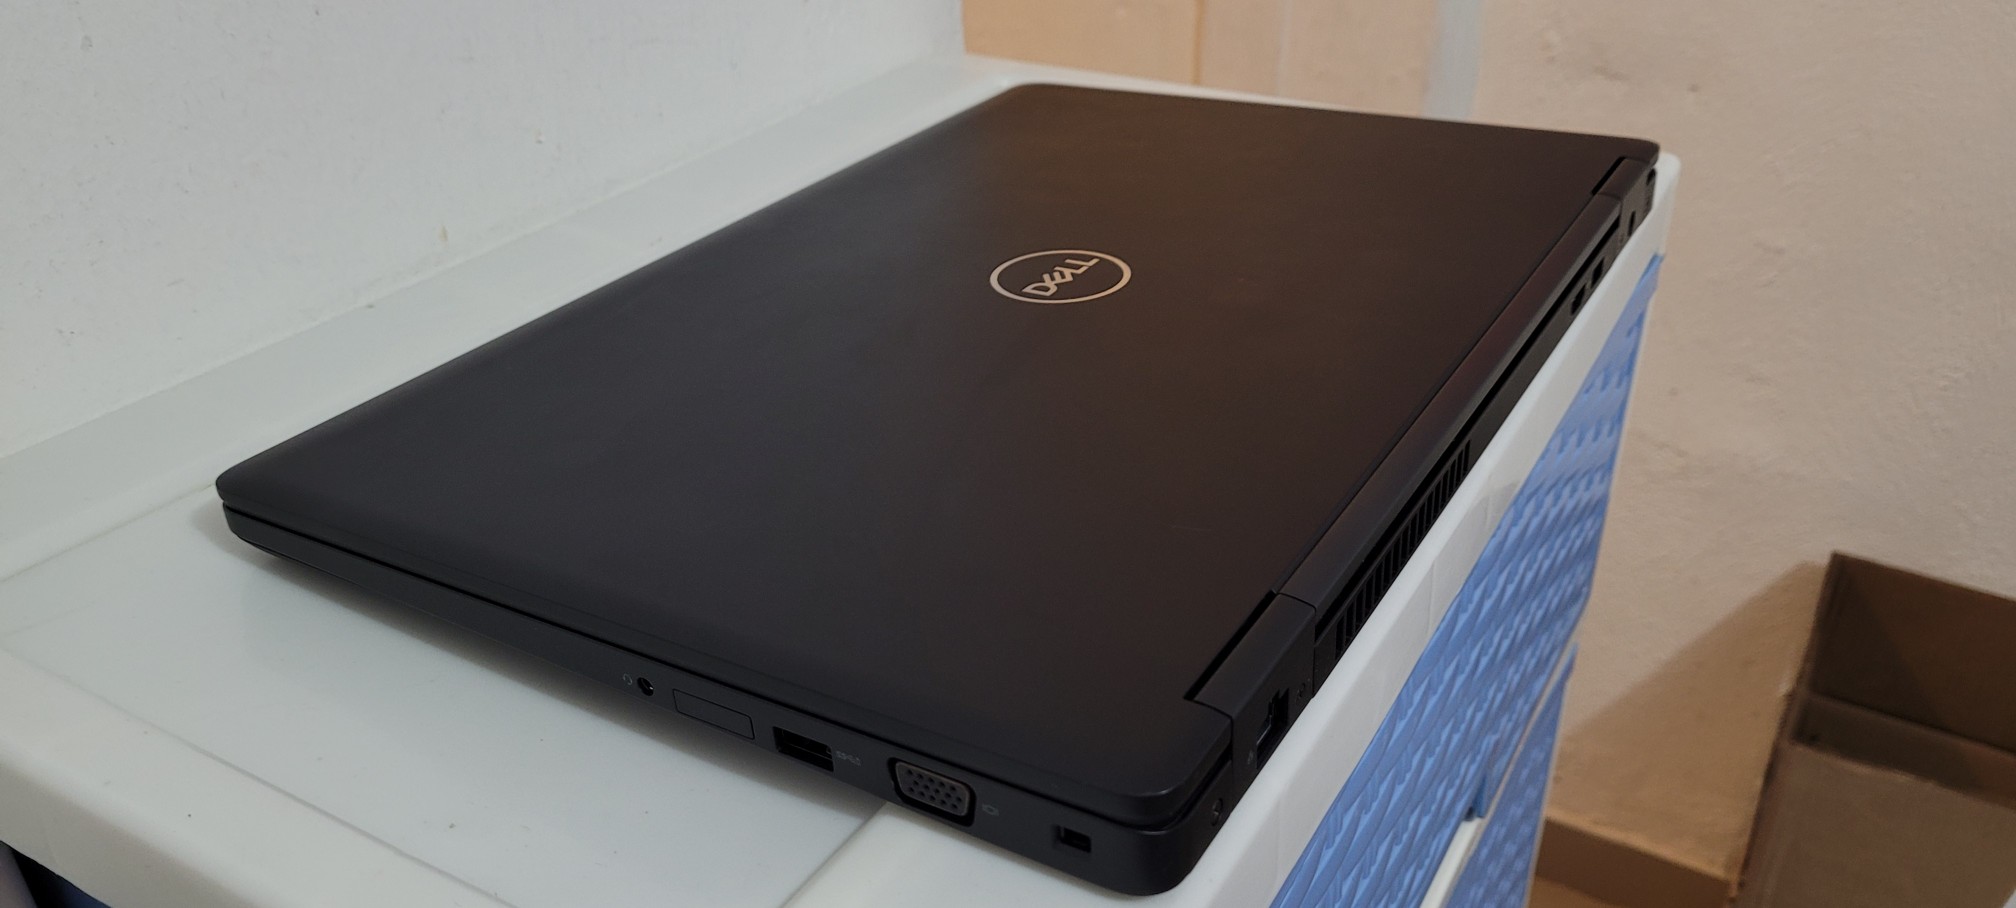 computadoras y laptops - Dell 5570 17 Pulg Core i7 6ta Gen Ram 16gb Dico 256gb SSD Doble Tarjeta de Video 2